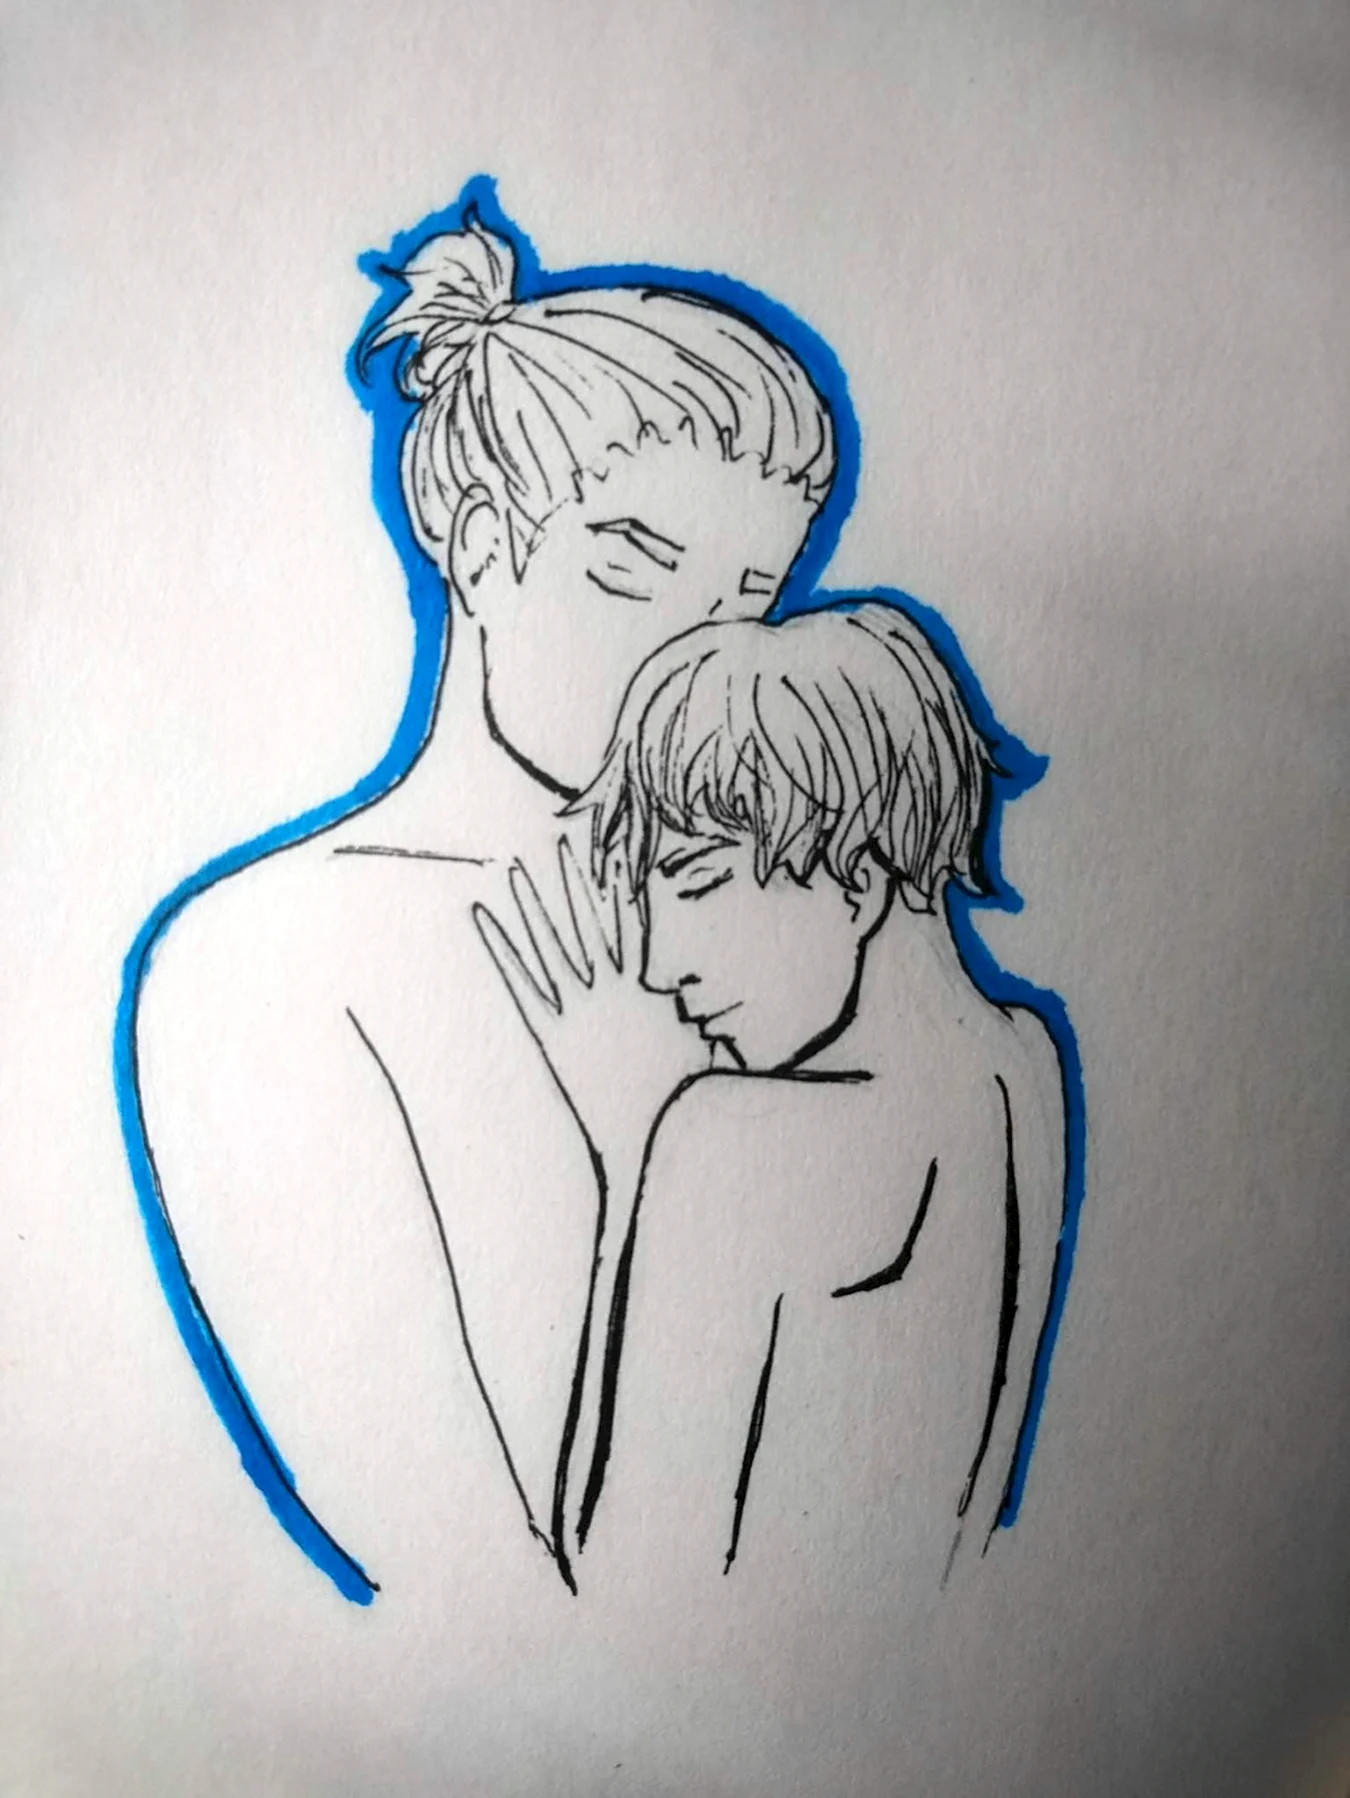 ЛГБТ рисунки для срисовки лёгкие. Для срисовки